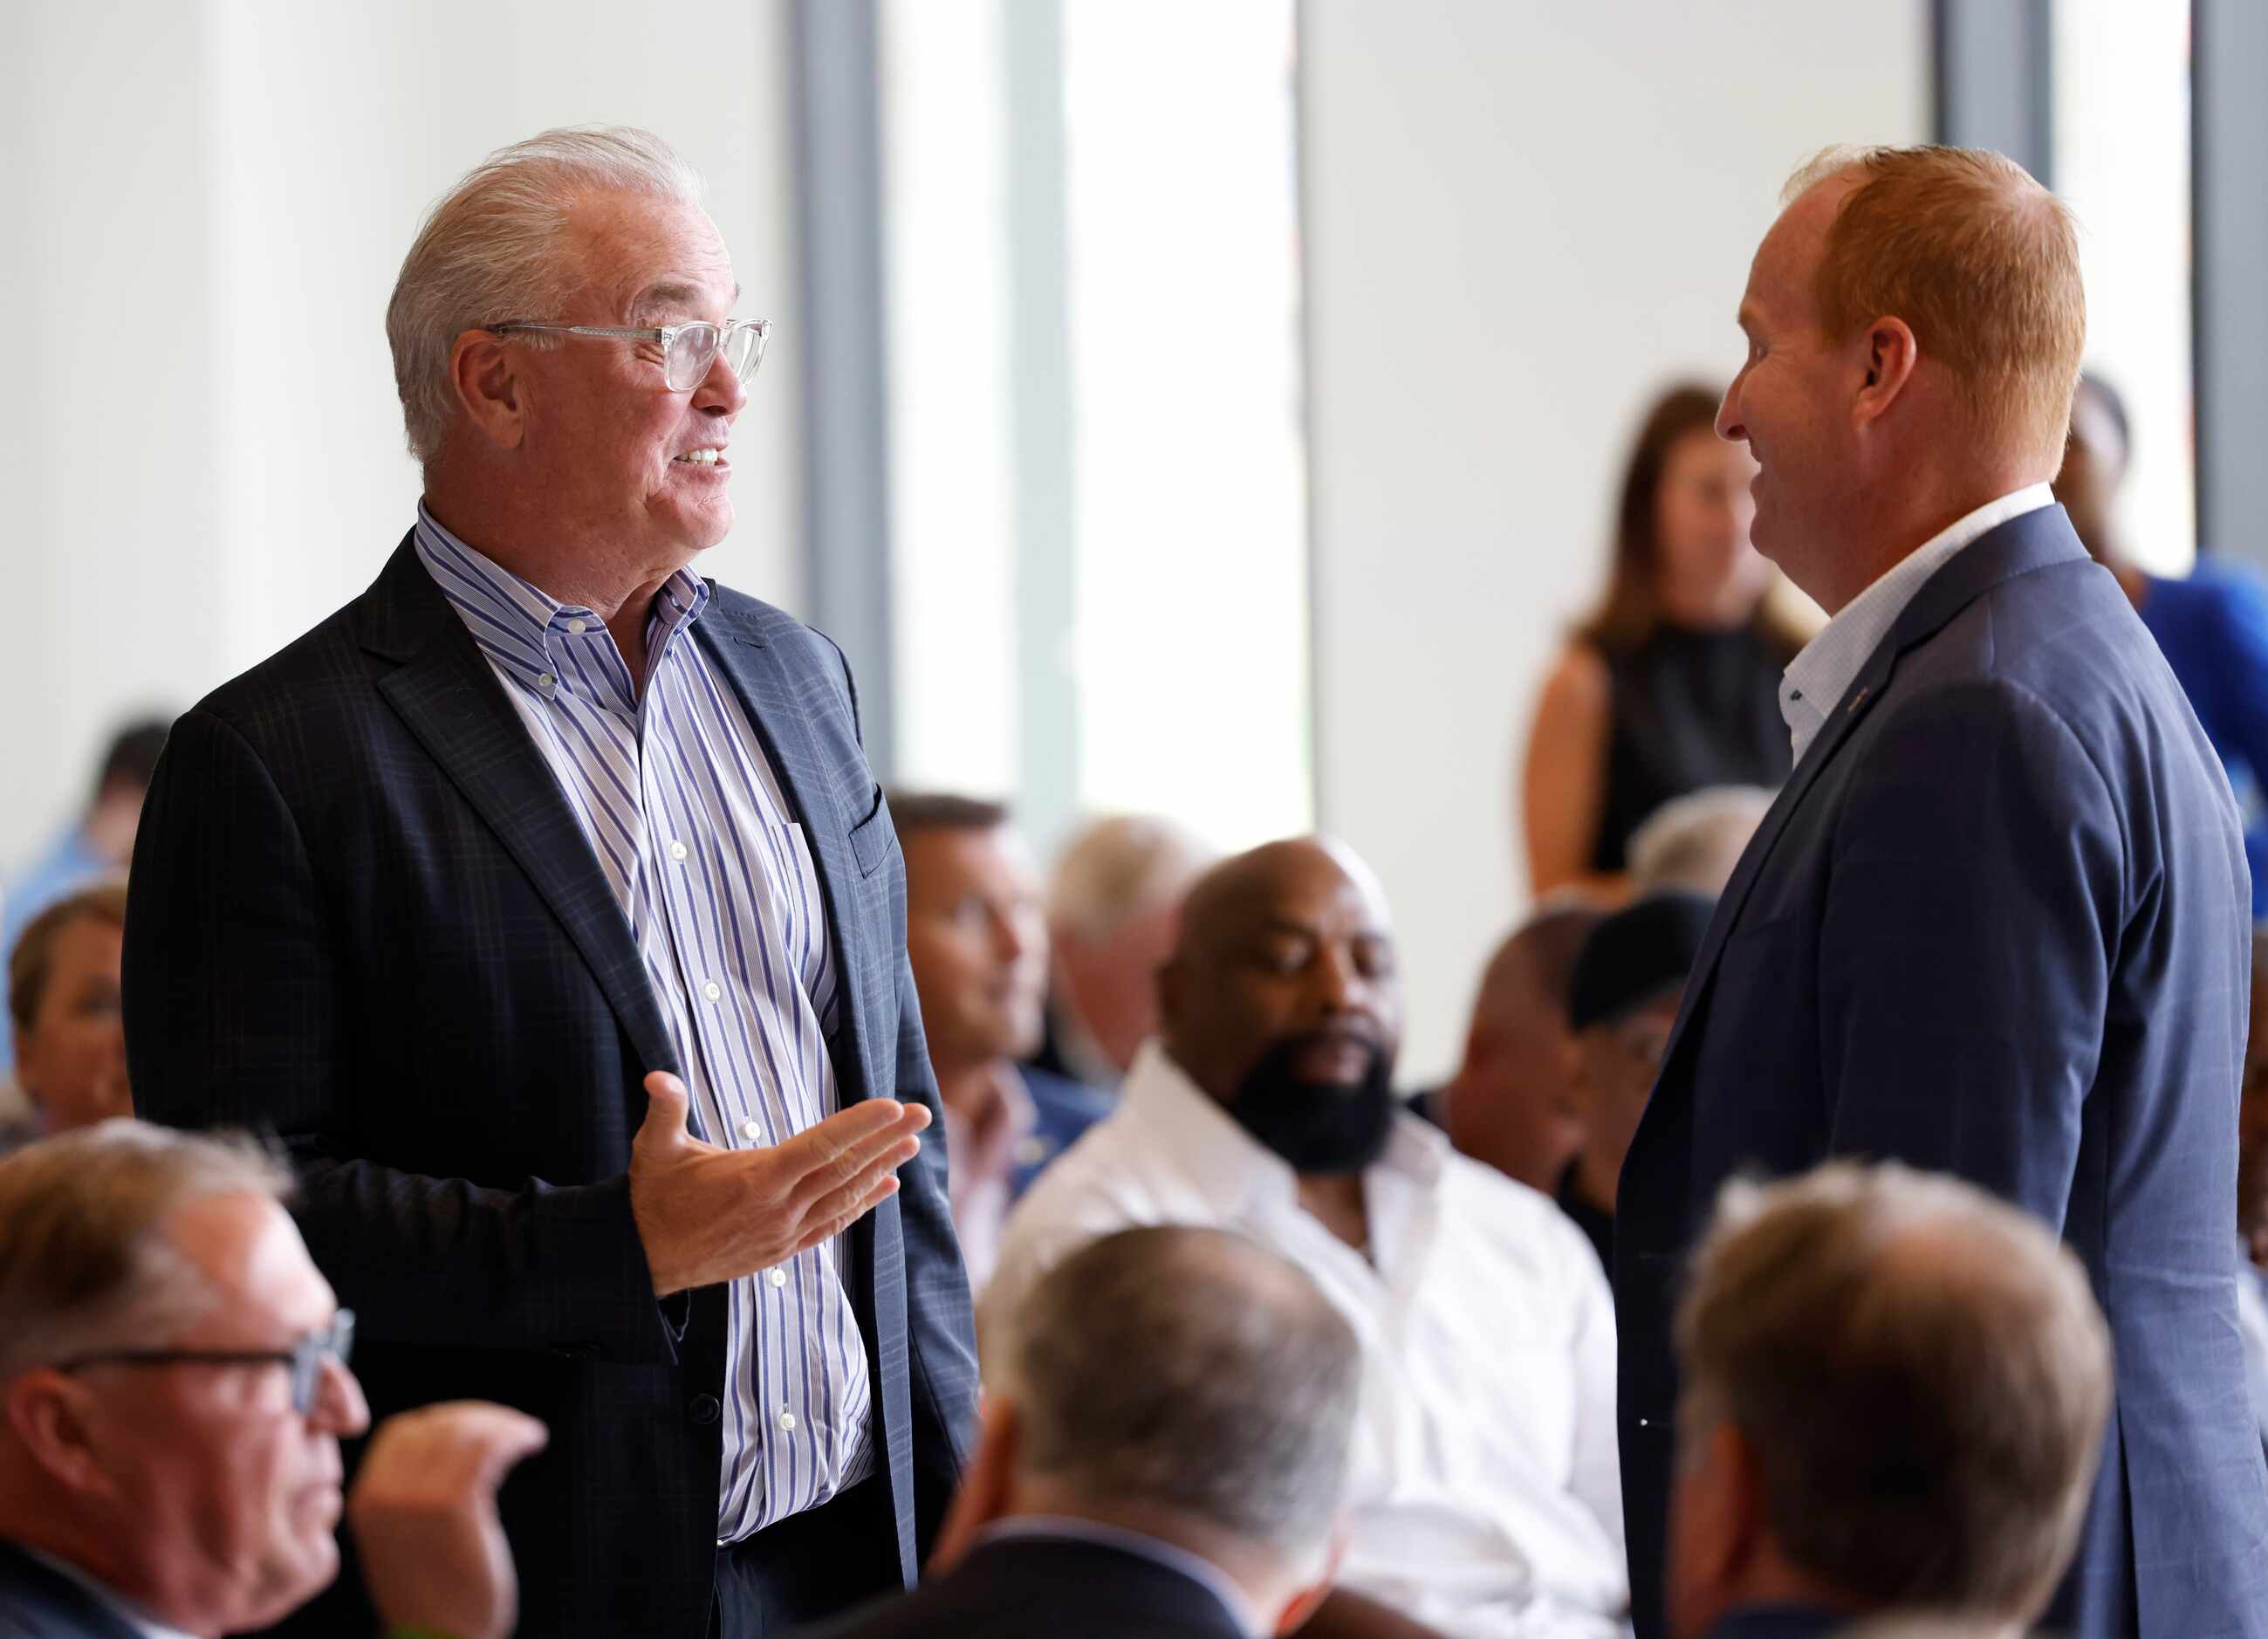 Dallas Cowboys executive Vice President Stephen Jones and mayor of Frisco, Jeff Cheney talk...